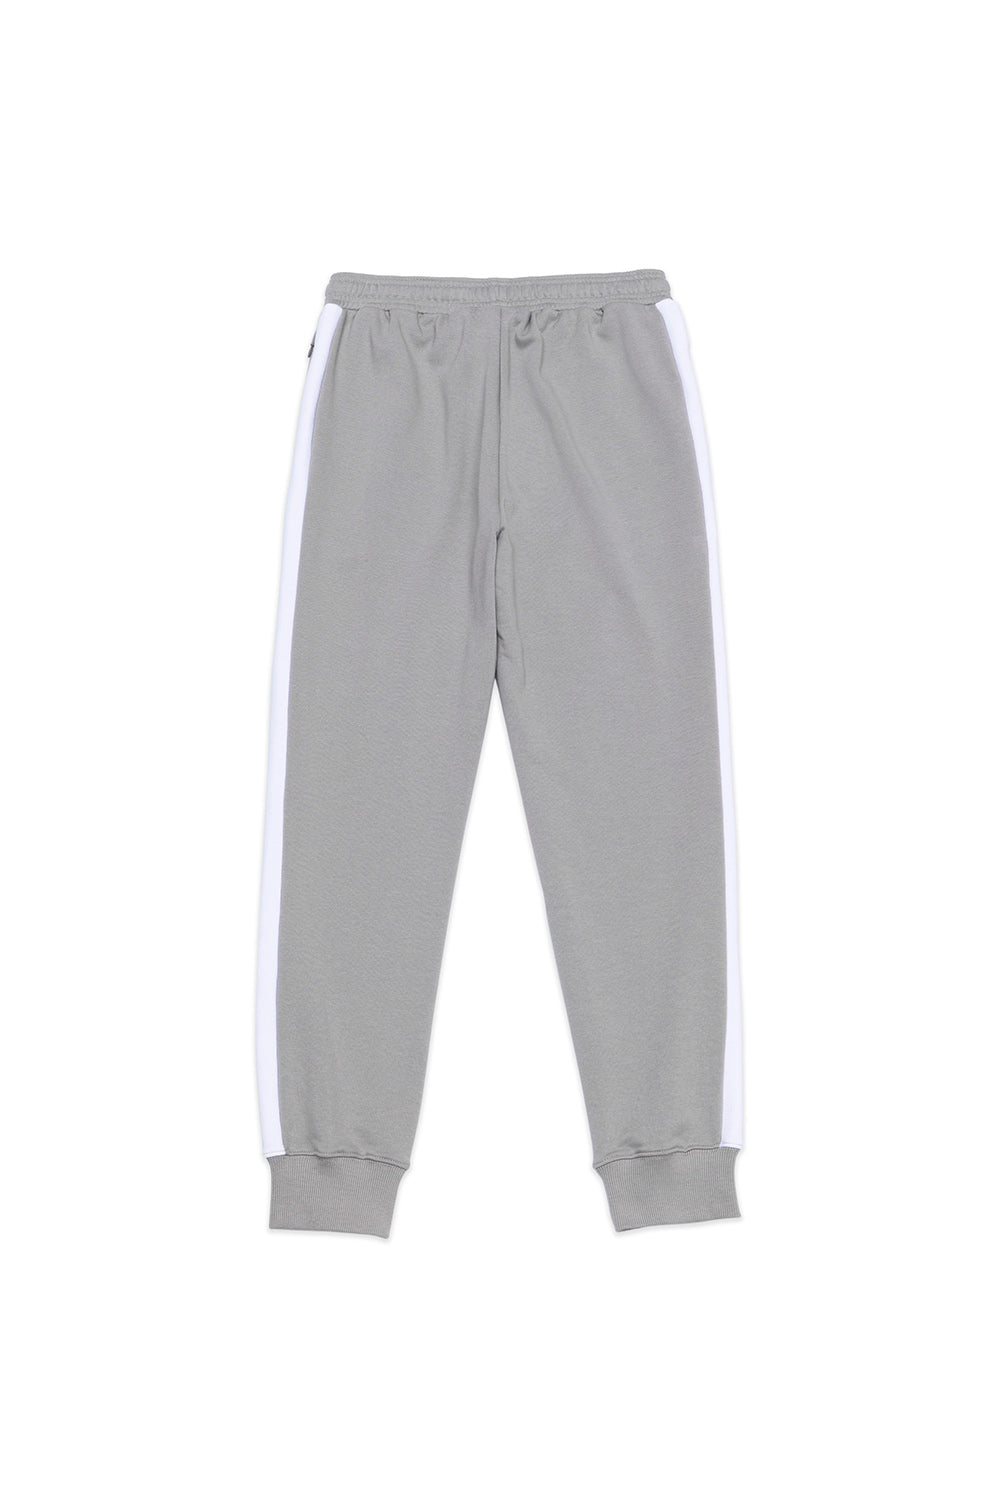 Men's Sweat Pants Gray R38133-880